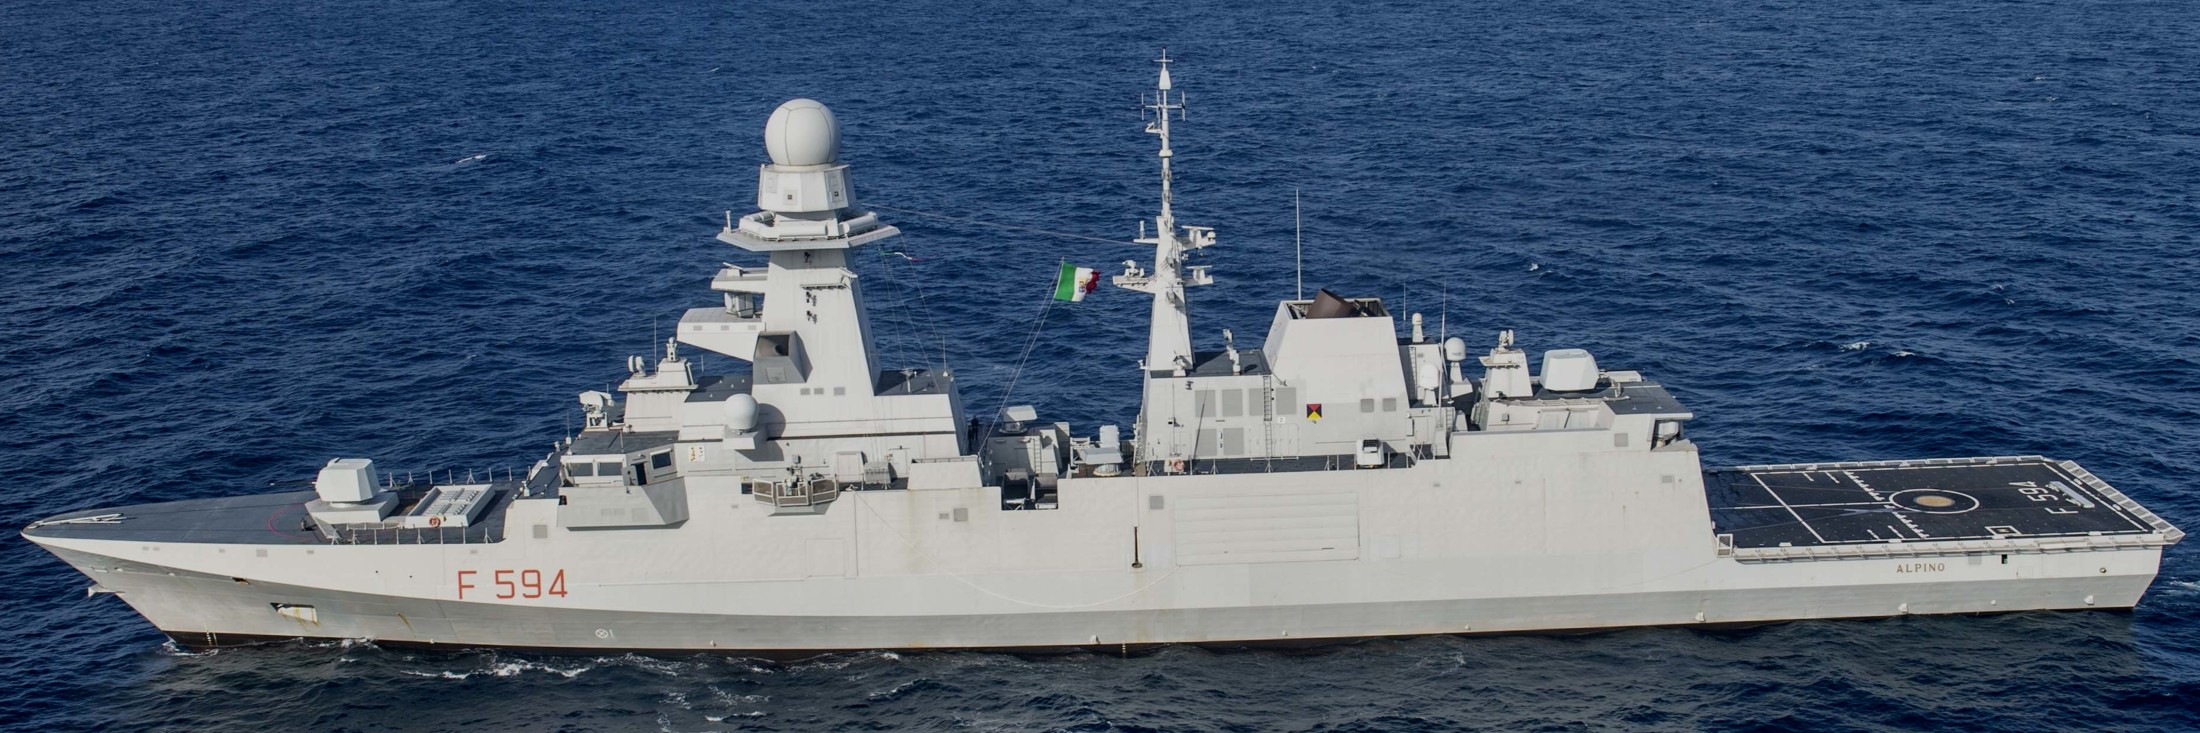 f-594 alpino its nave bergamini fremm class guided missile frigate italian navy marina militare 33